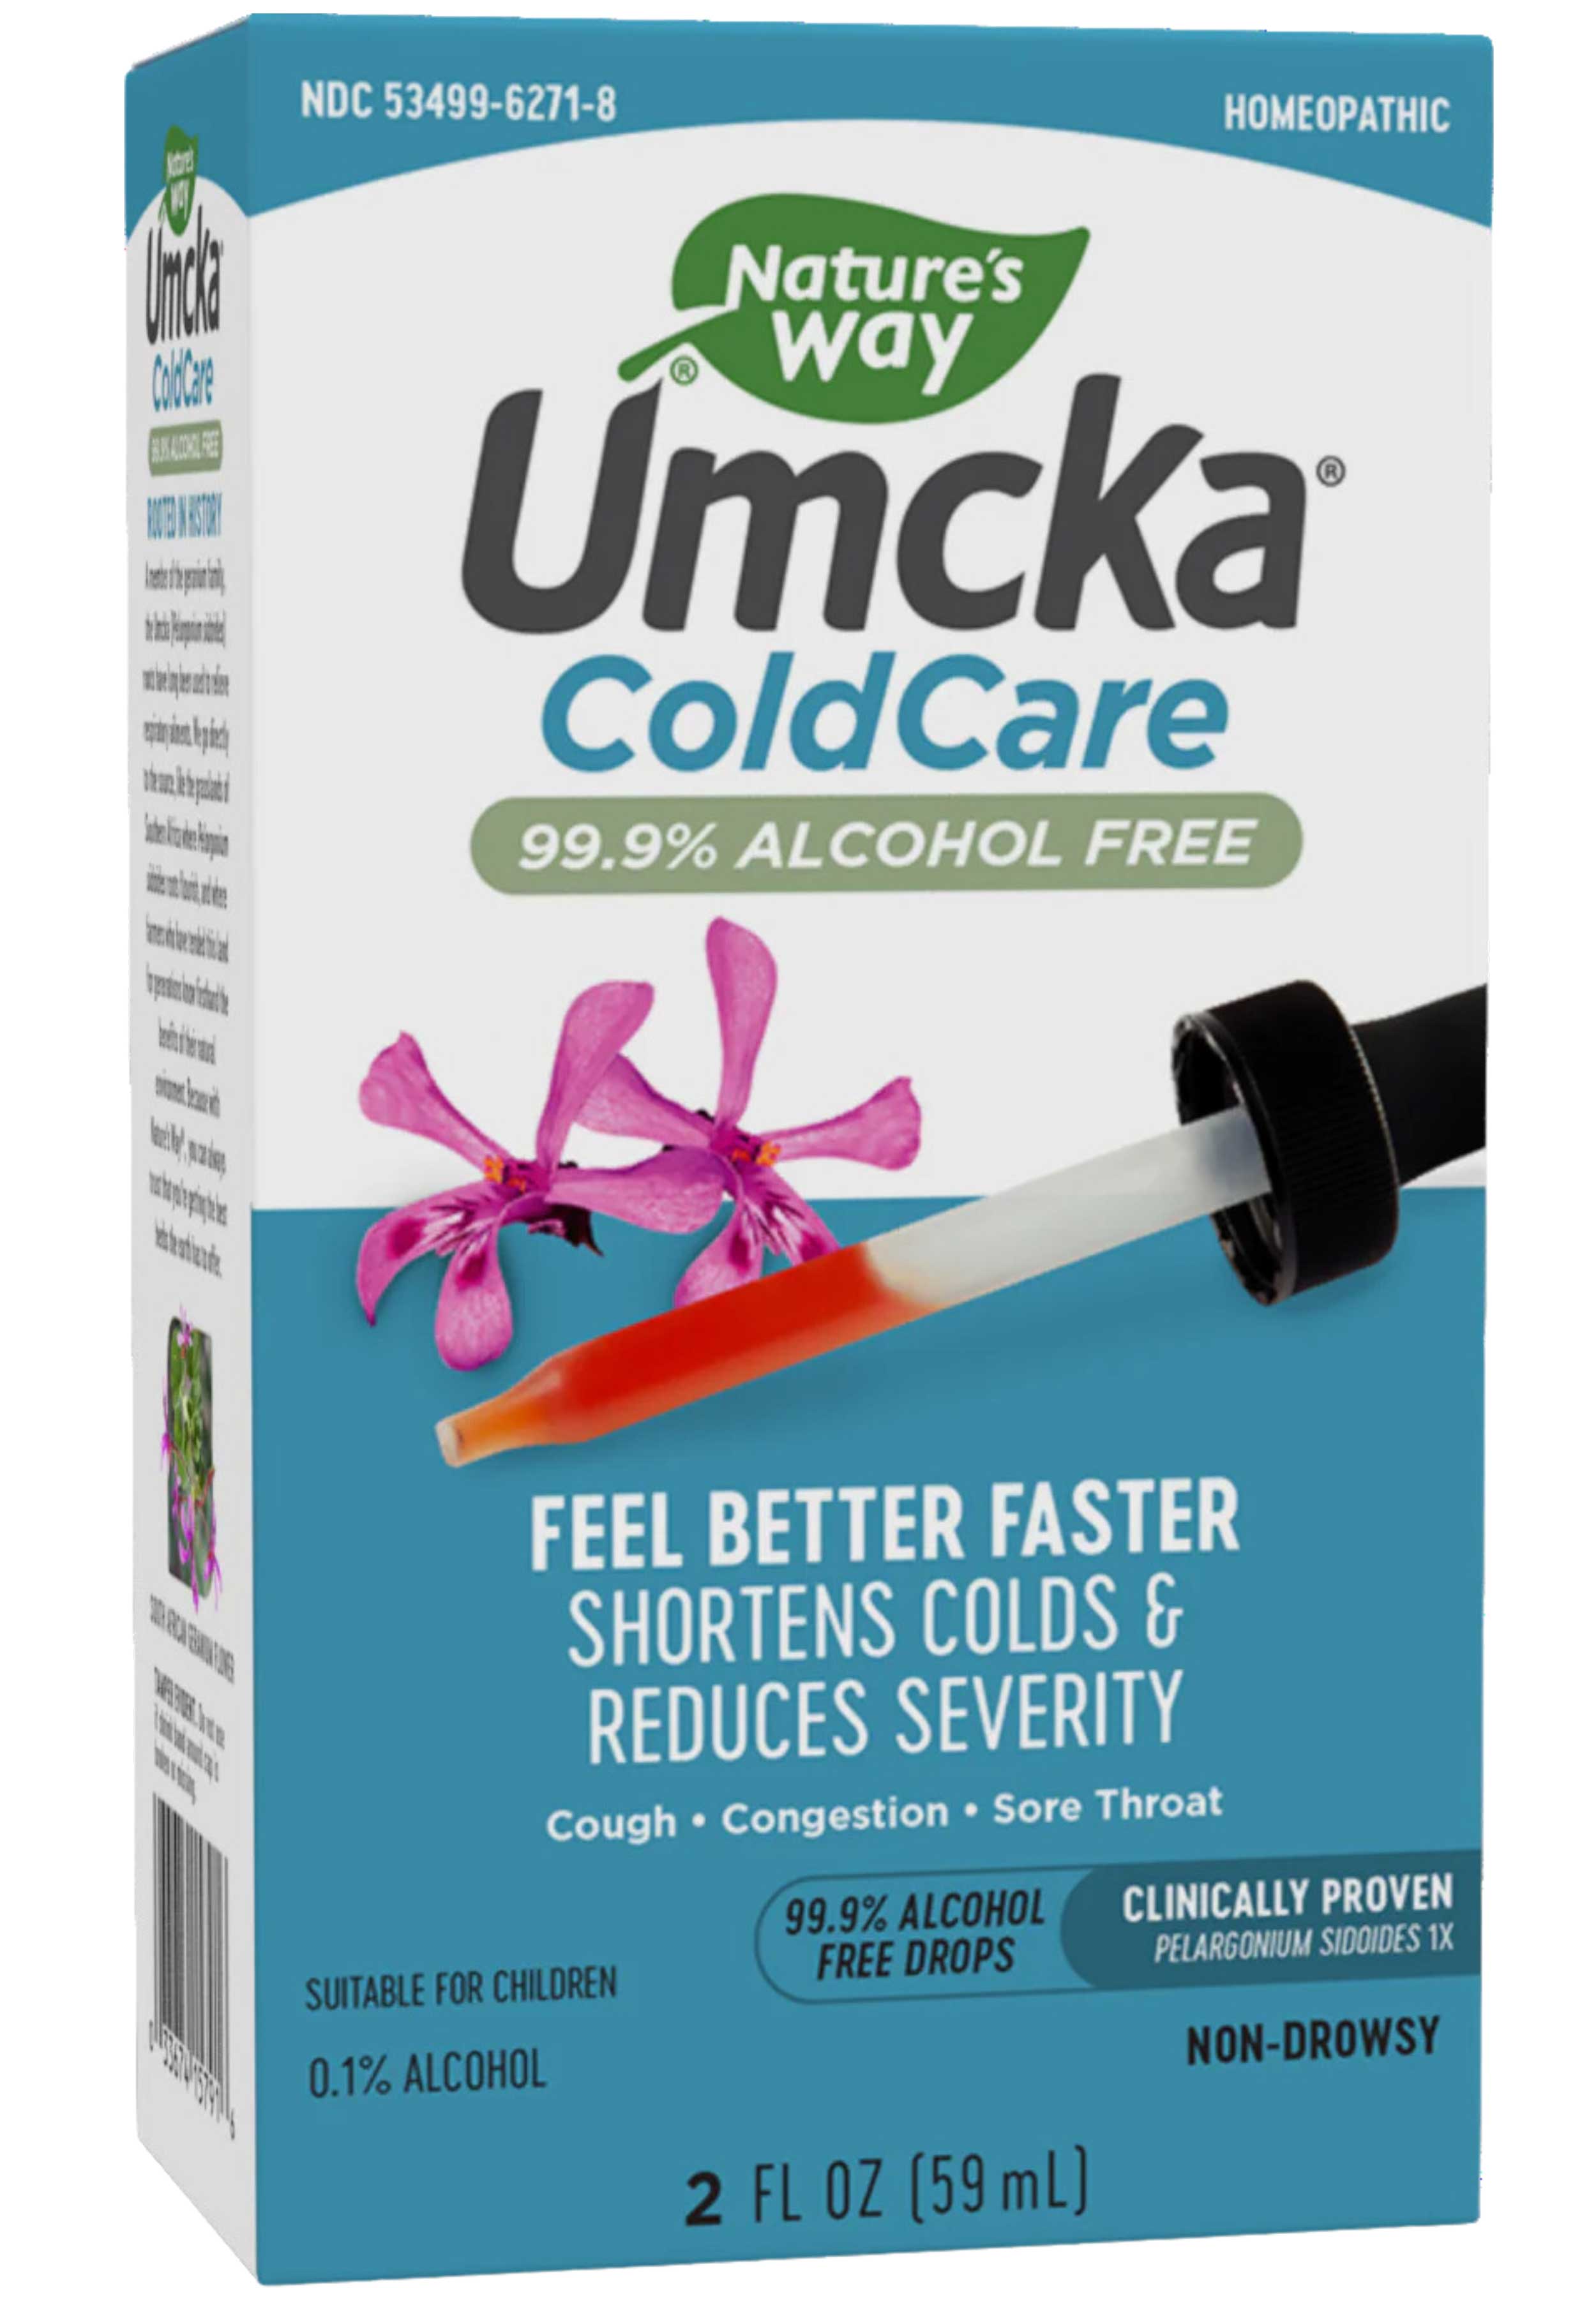 Nature's Way Umcka ColdCare 99.9% Alcohol-Free Drops